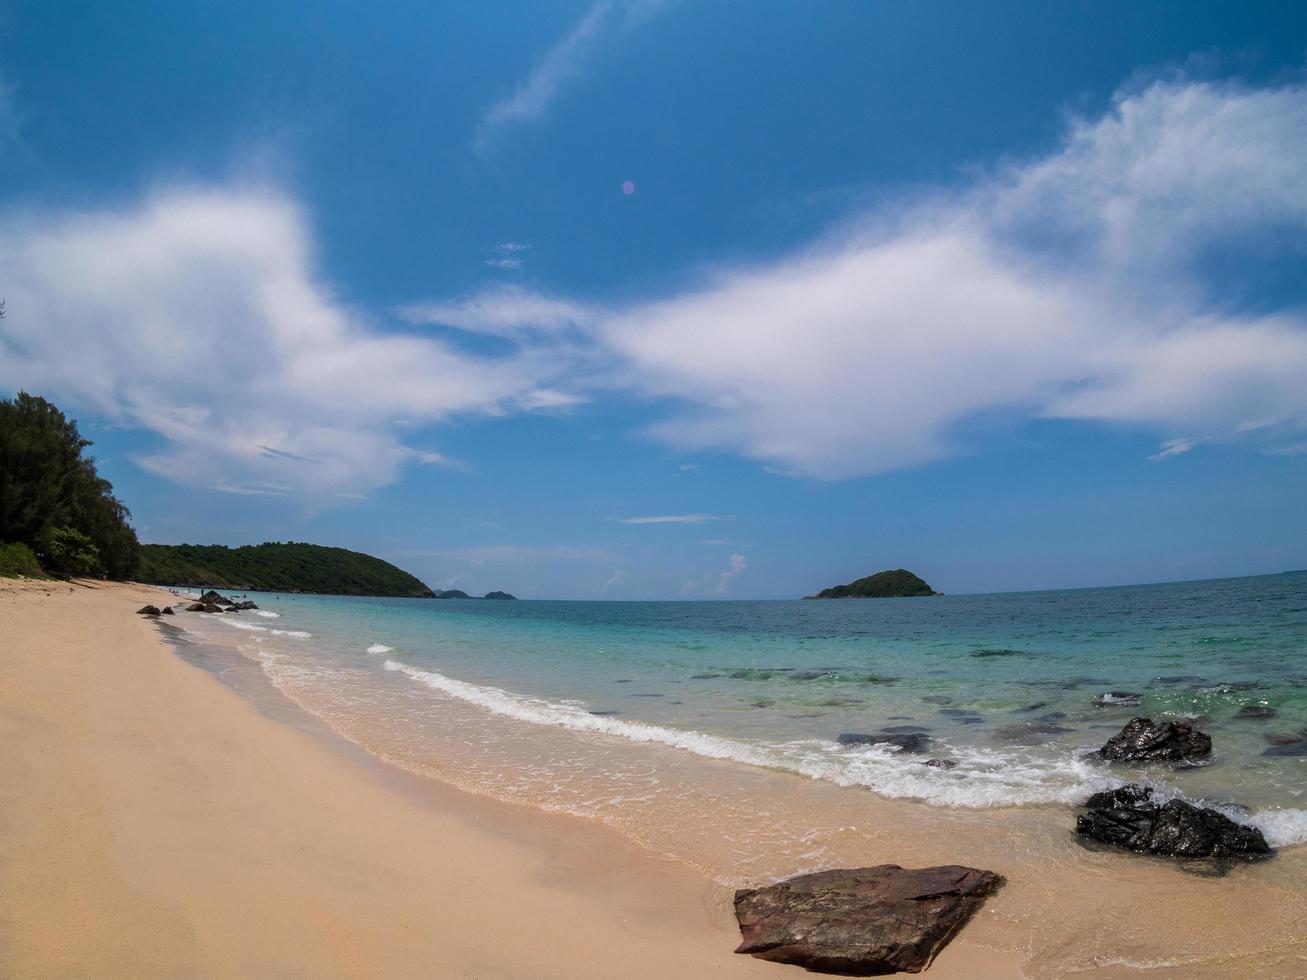 landschap zomer visoog tropisch zee strand rots blauw lucht wit zand achtergrond kalmte natuur oceaan mooi Golf Botsing spatten water reizen nang RAM strand oosten- Thailand chonburi exotisch horizon foto